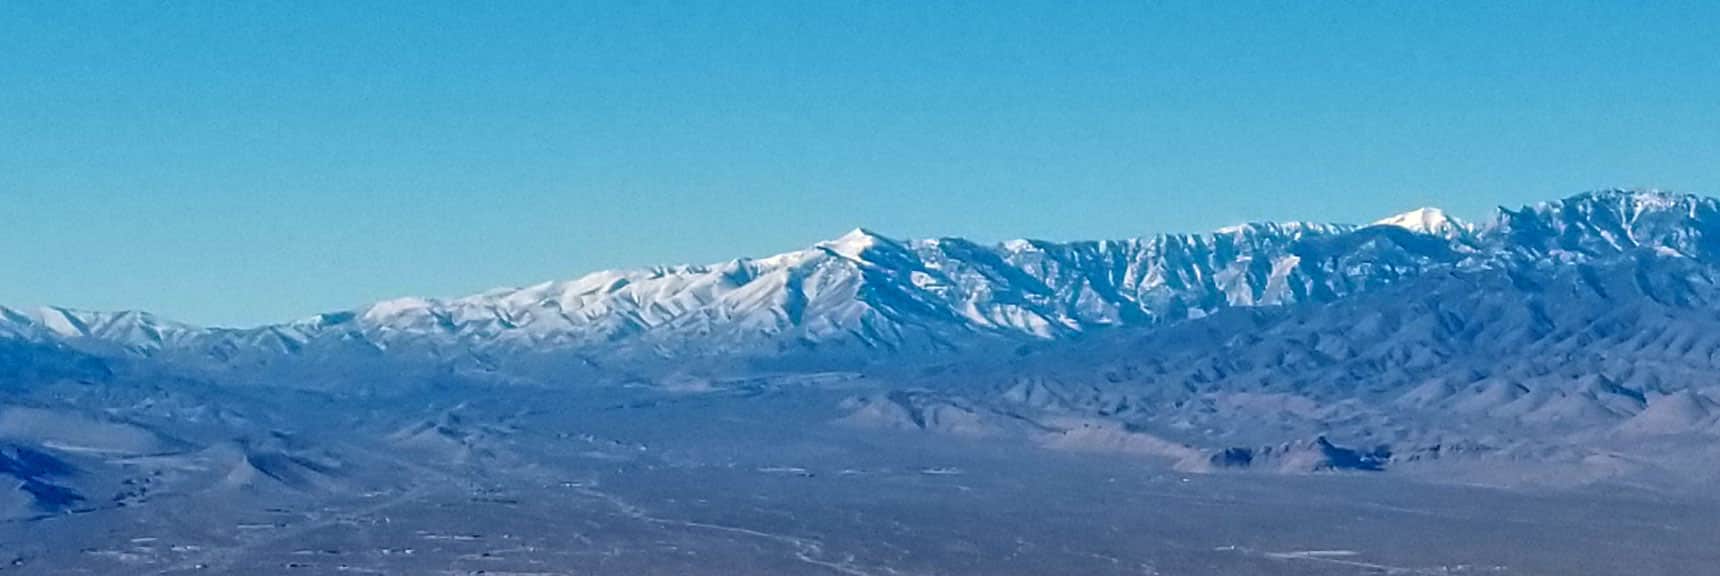 Griffith Peak Viewed from Gass Peak West Summit